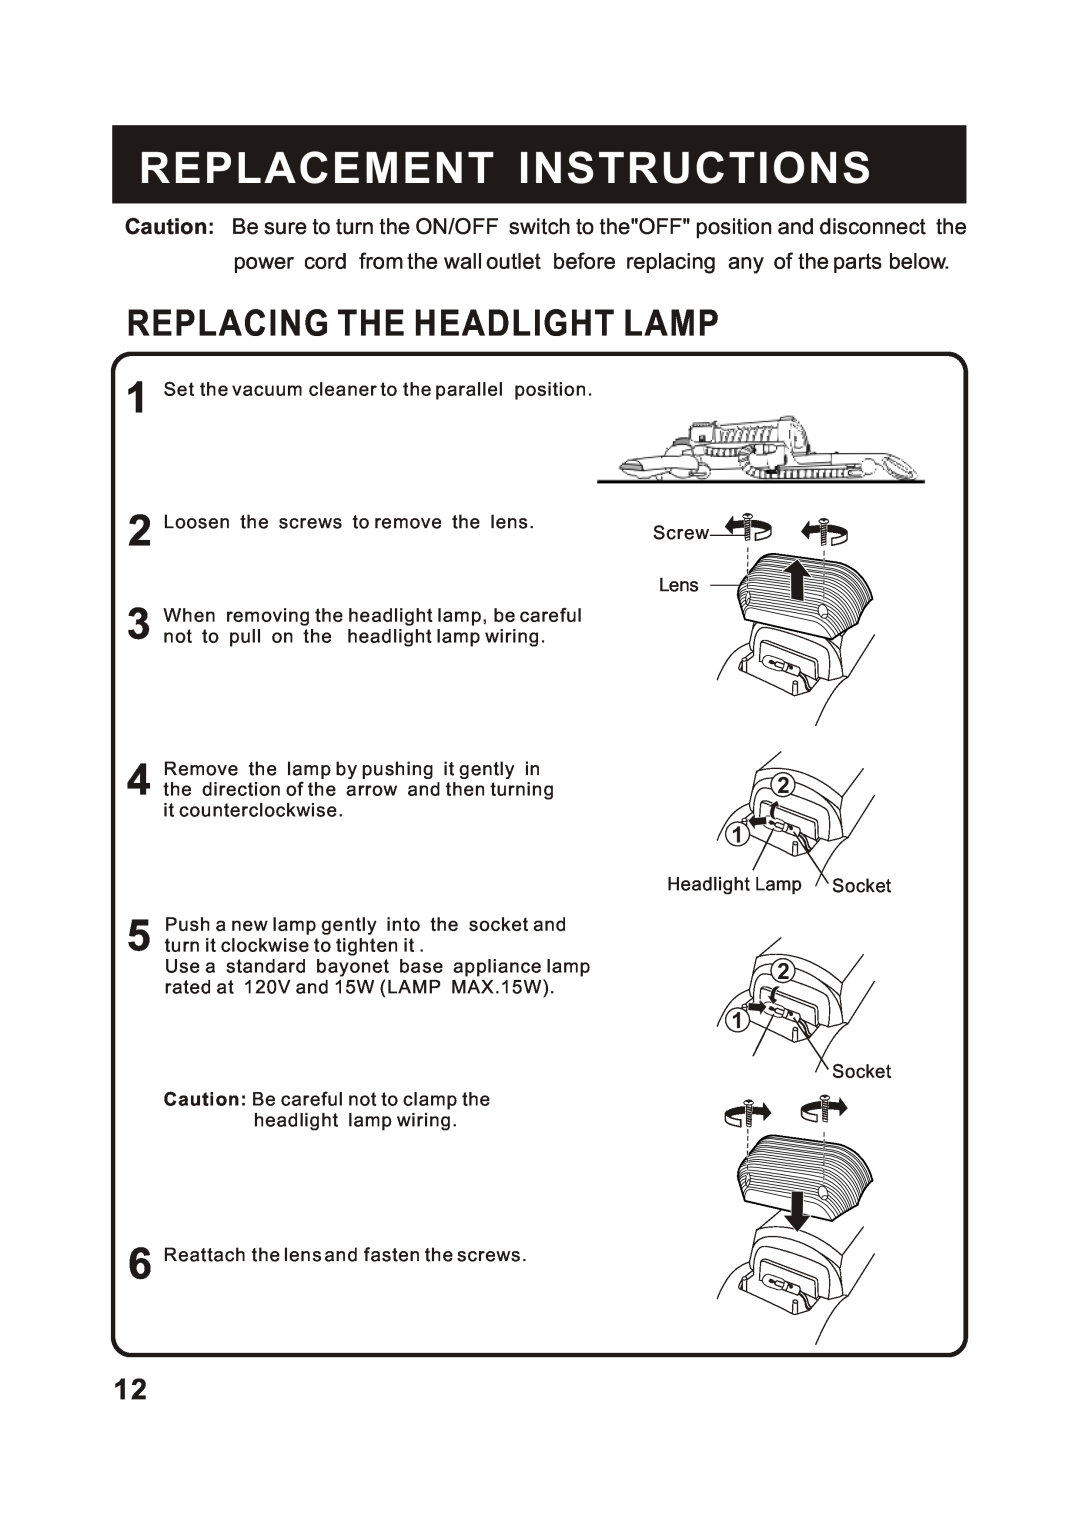 Fantom Vacuum FM743 instruction manual Replacement Instructions, Replacing The Headlight Lamp 